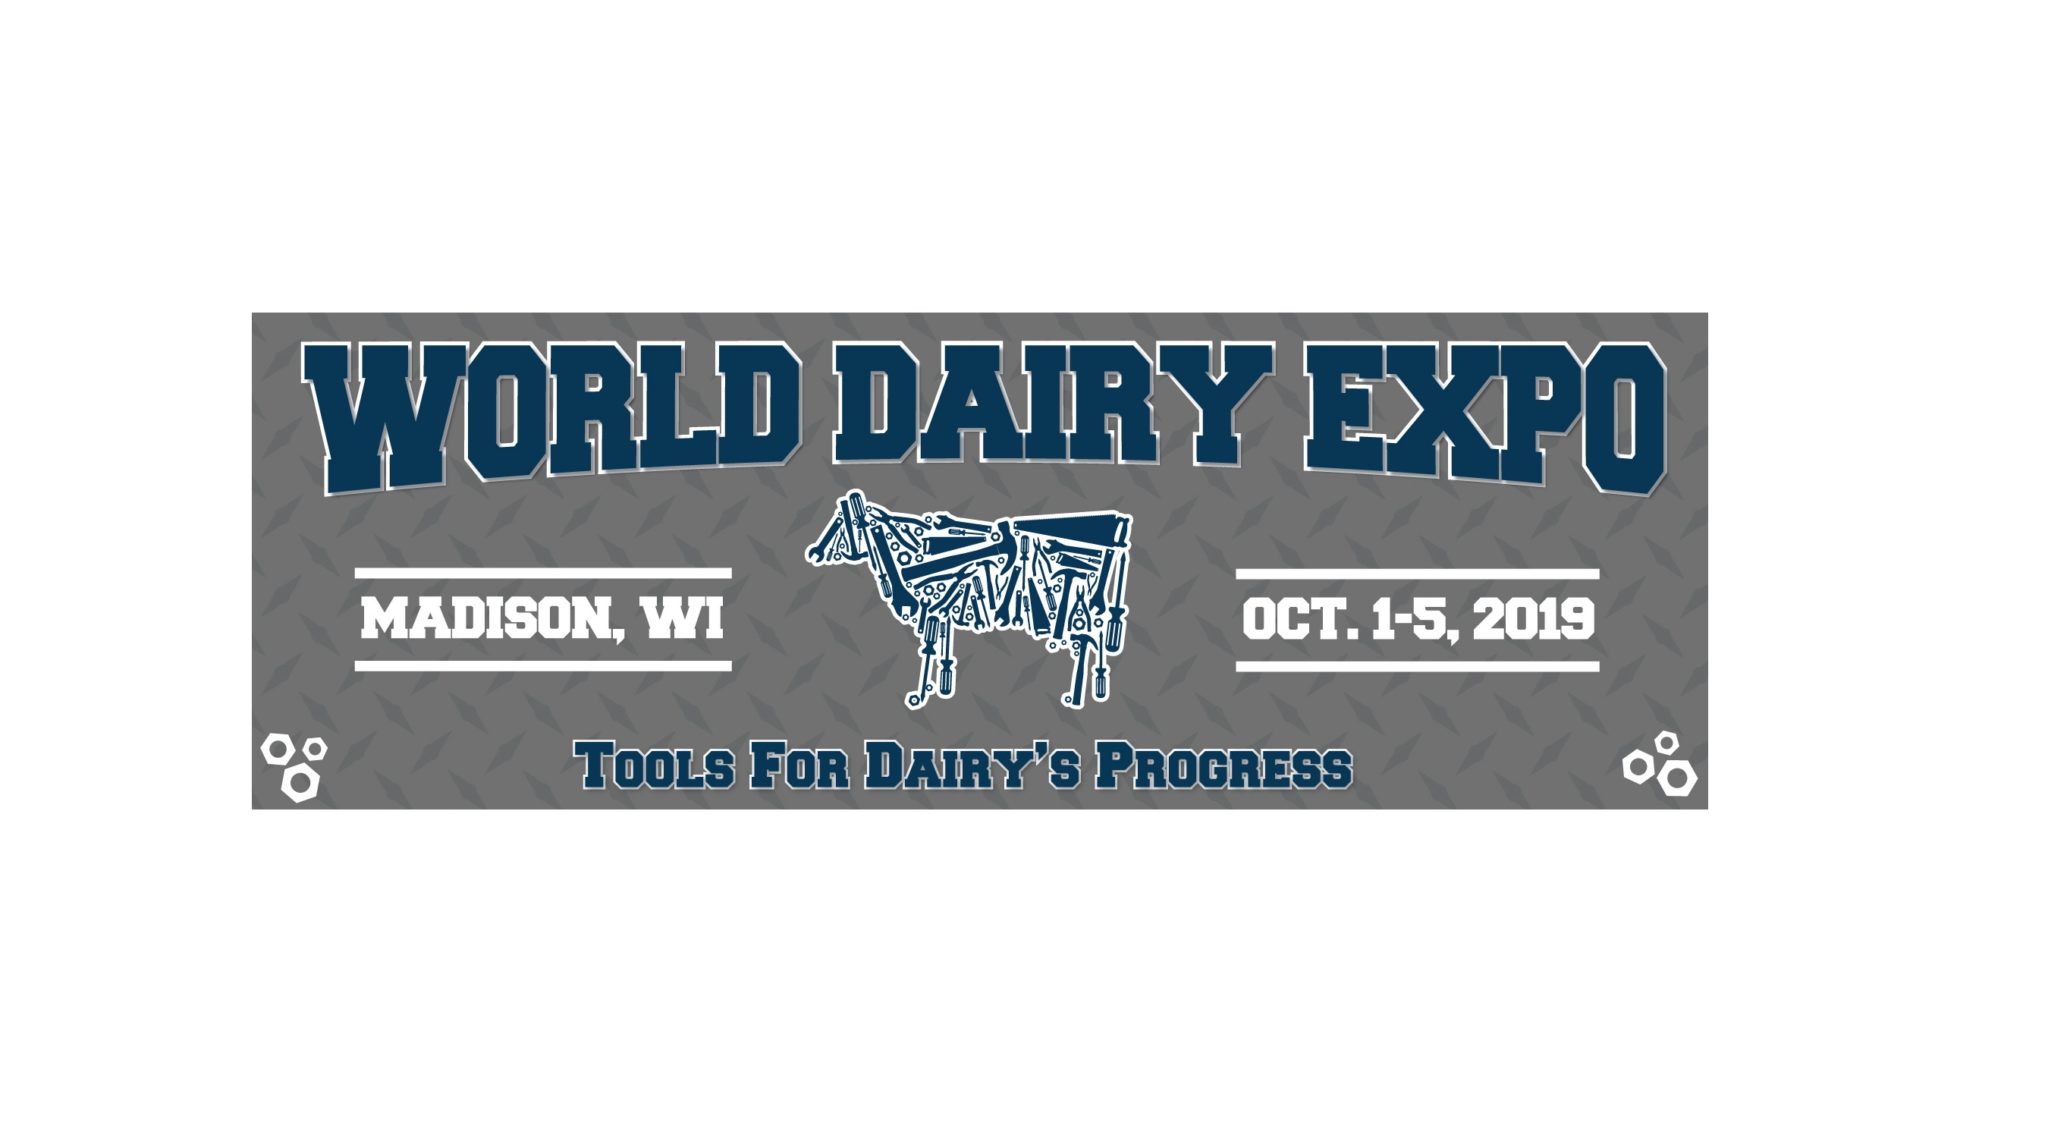 world dairy expo dates